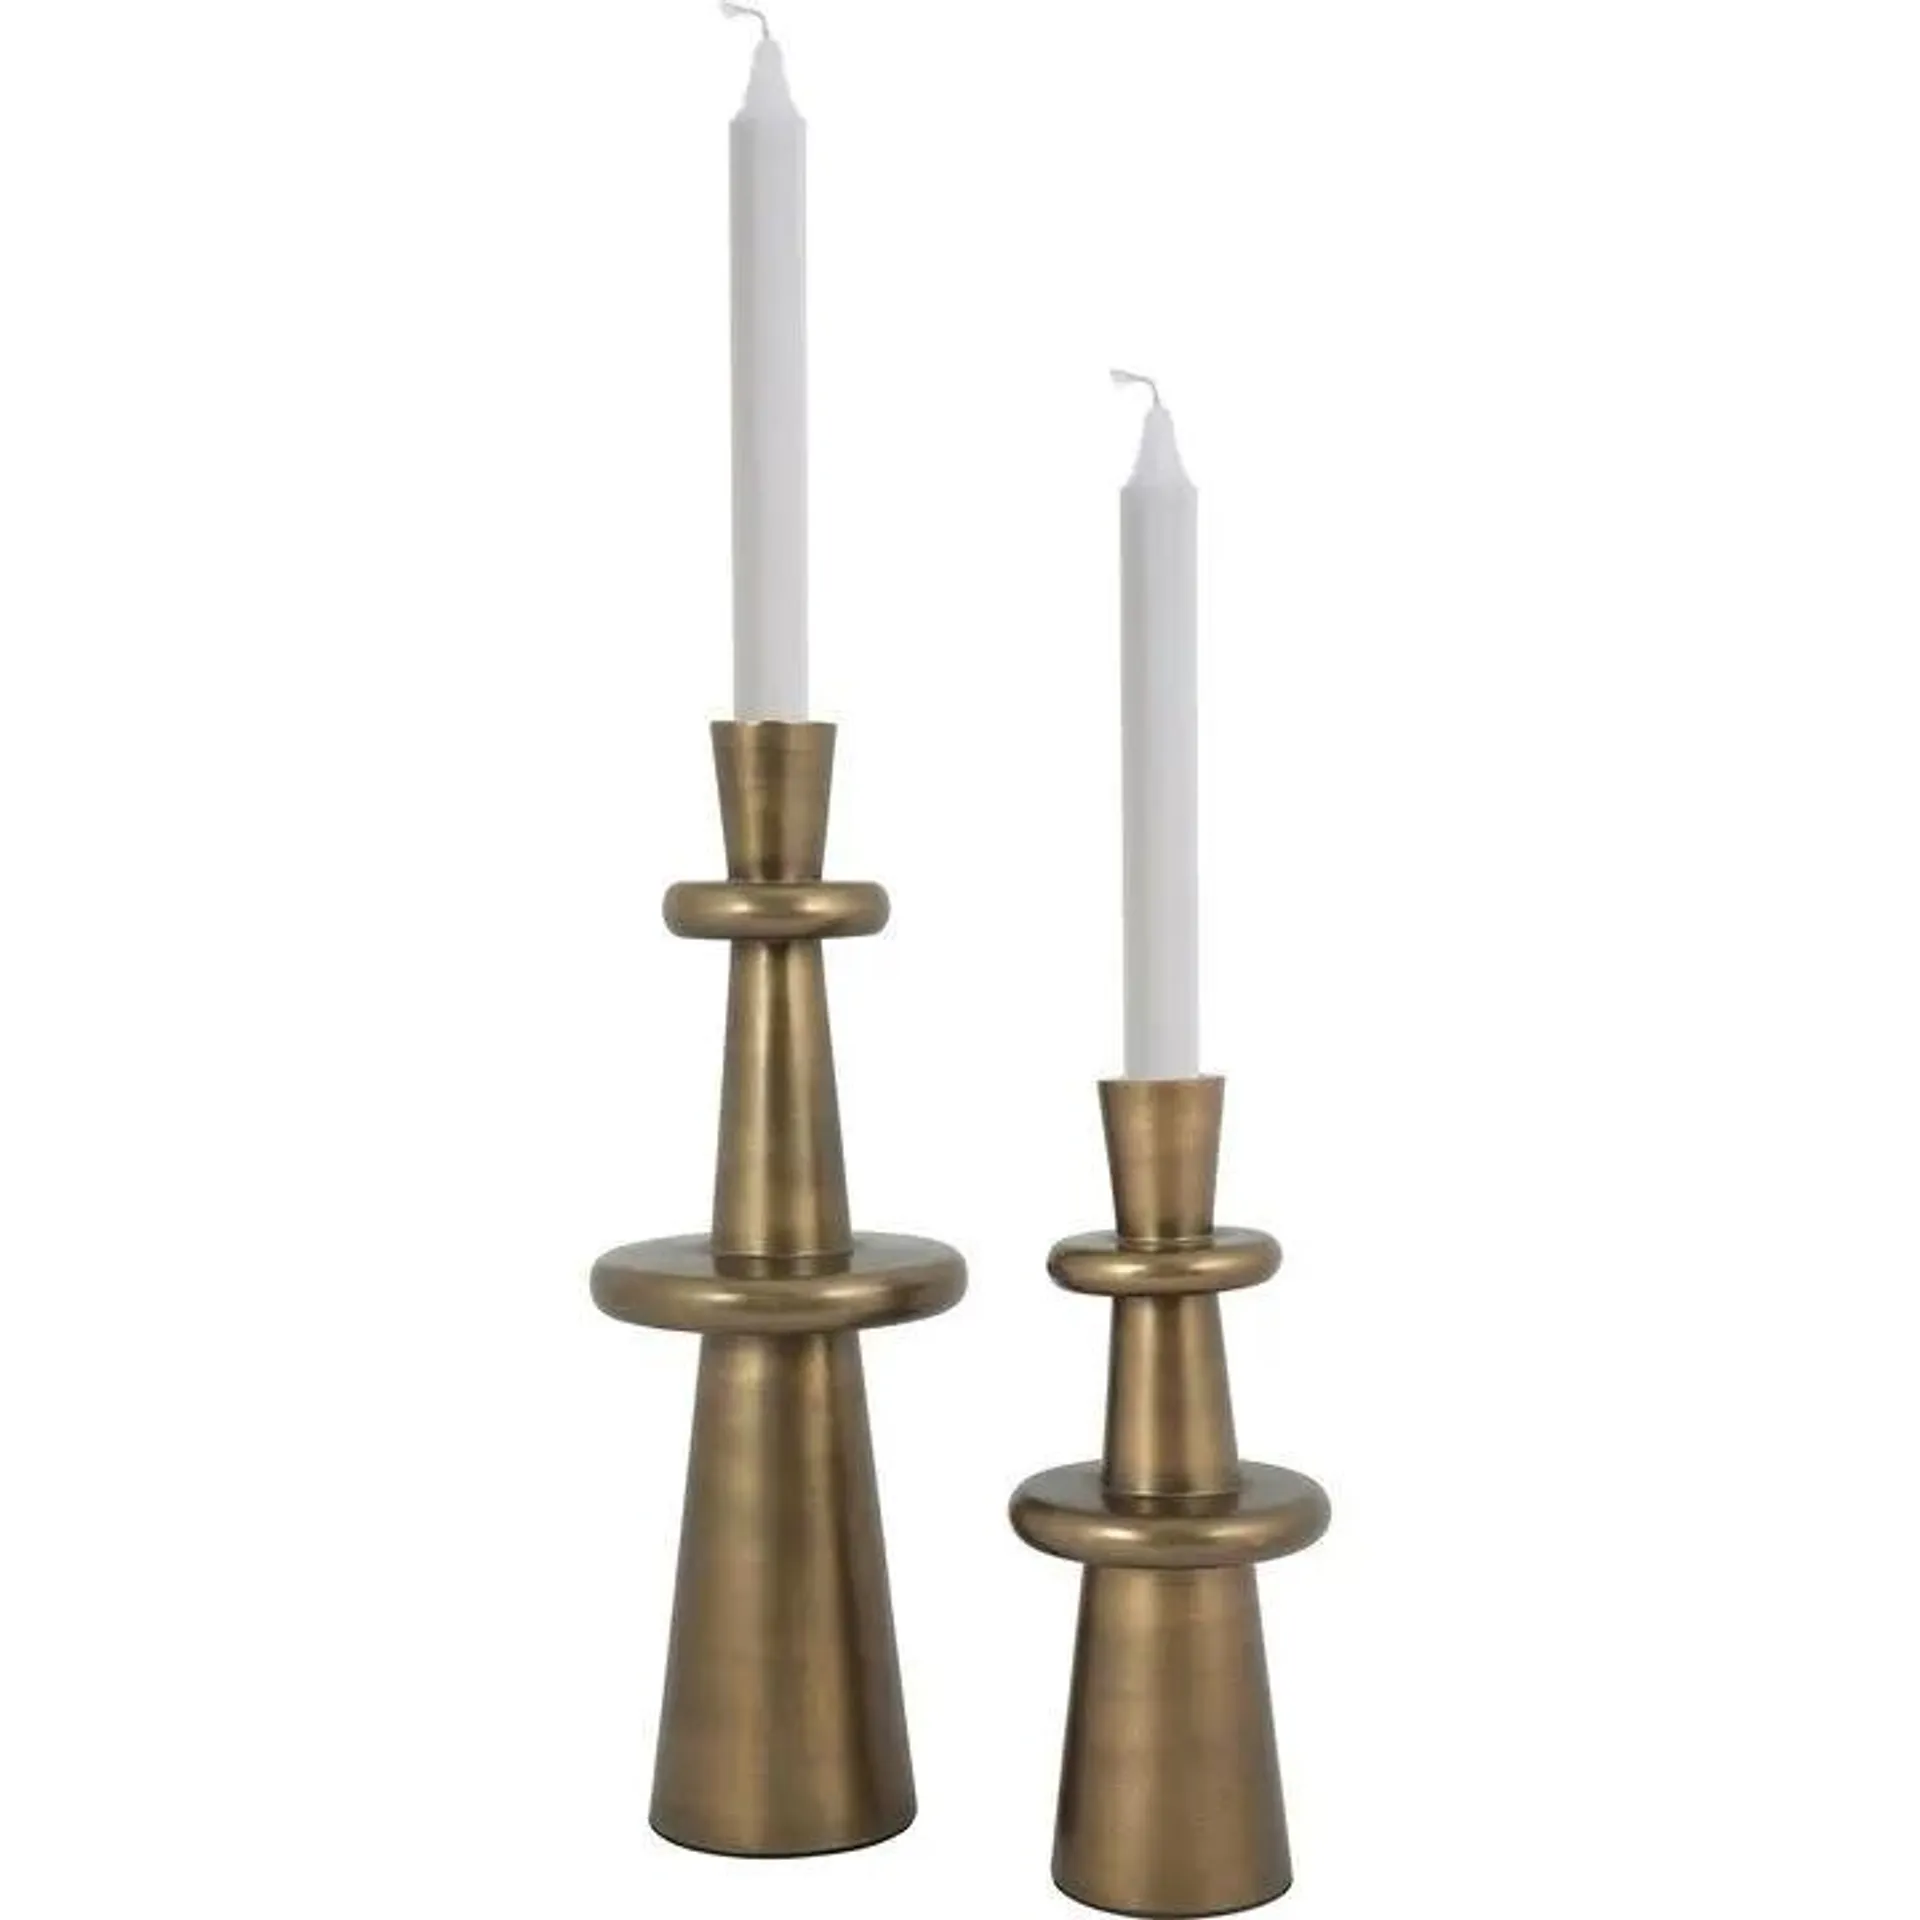 Set of 2 Bronze Antique Finish Candle Holders 14"